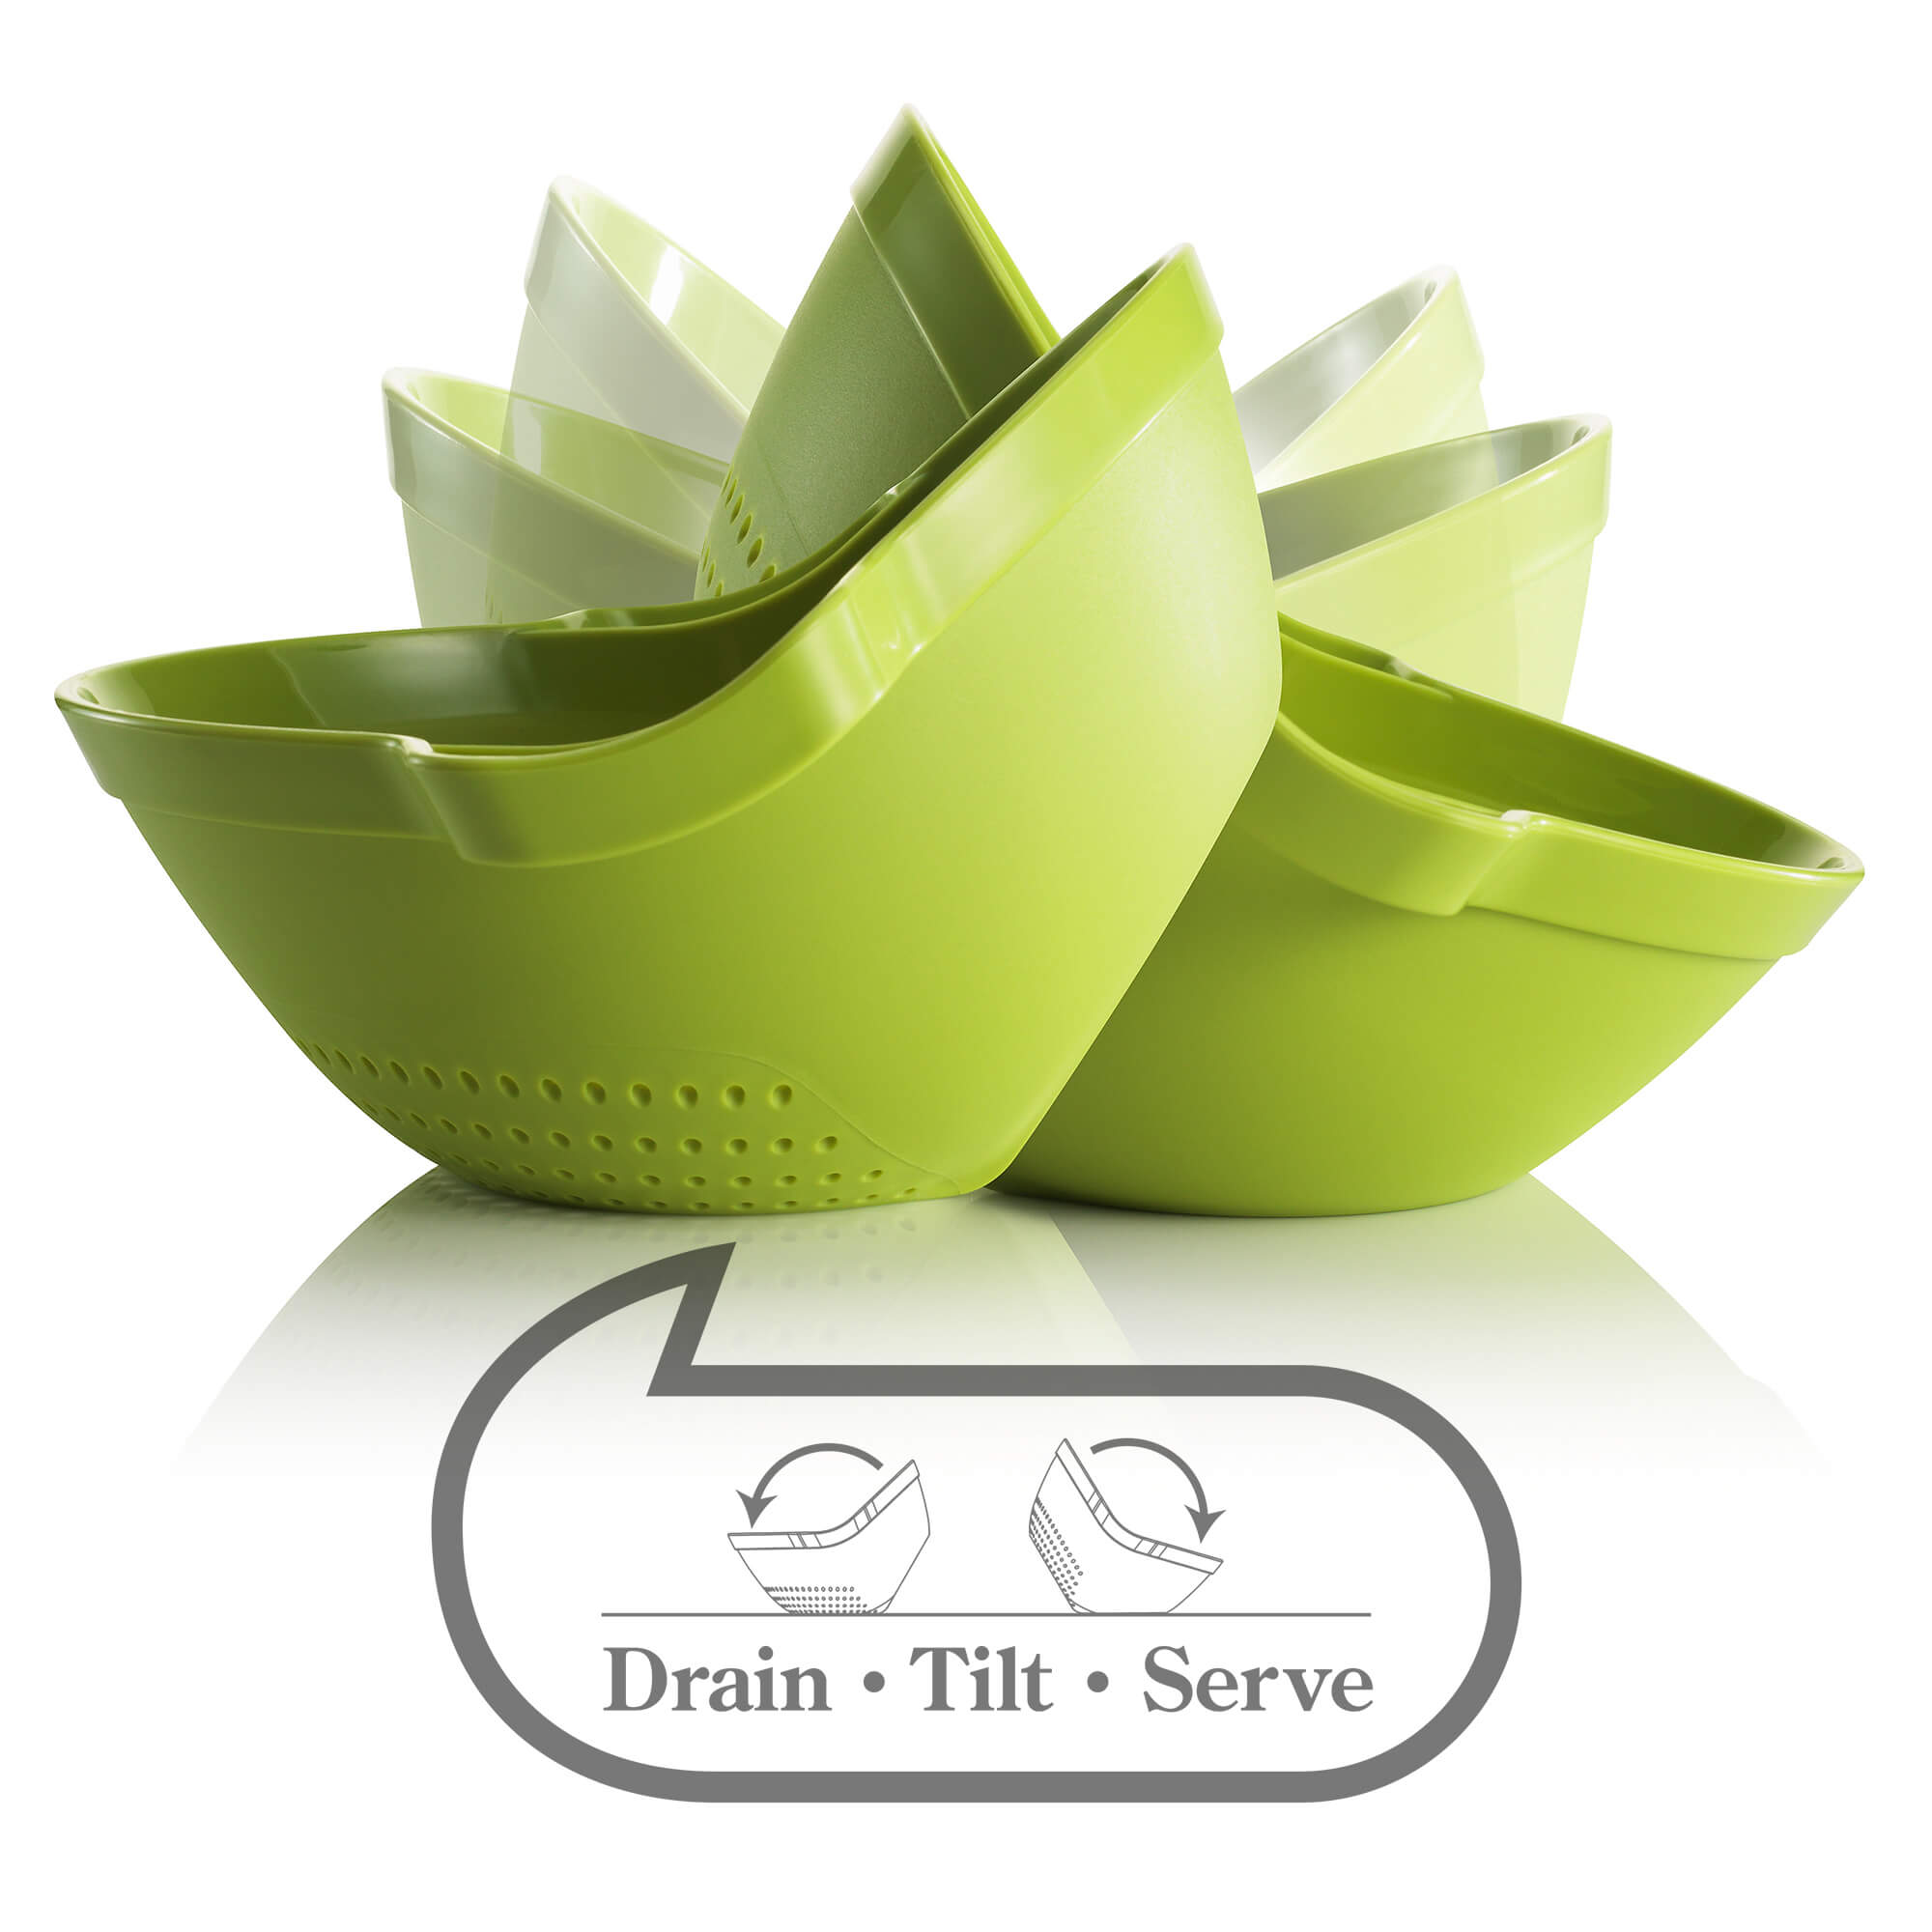 Zeal Drain & Serve Colander drain tilt and serve diagram